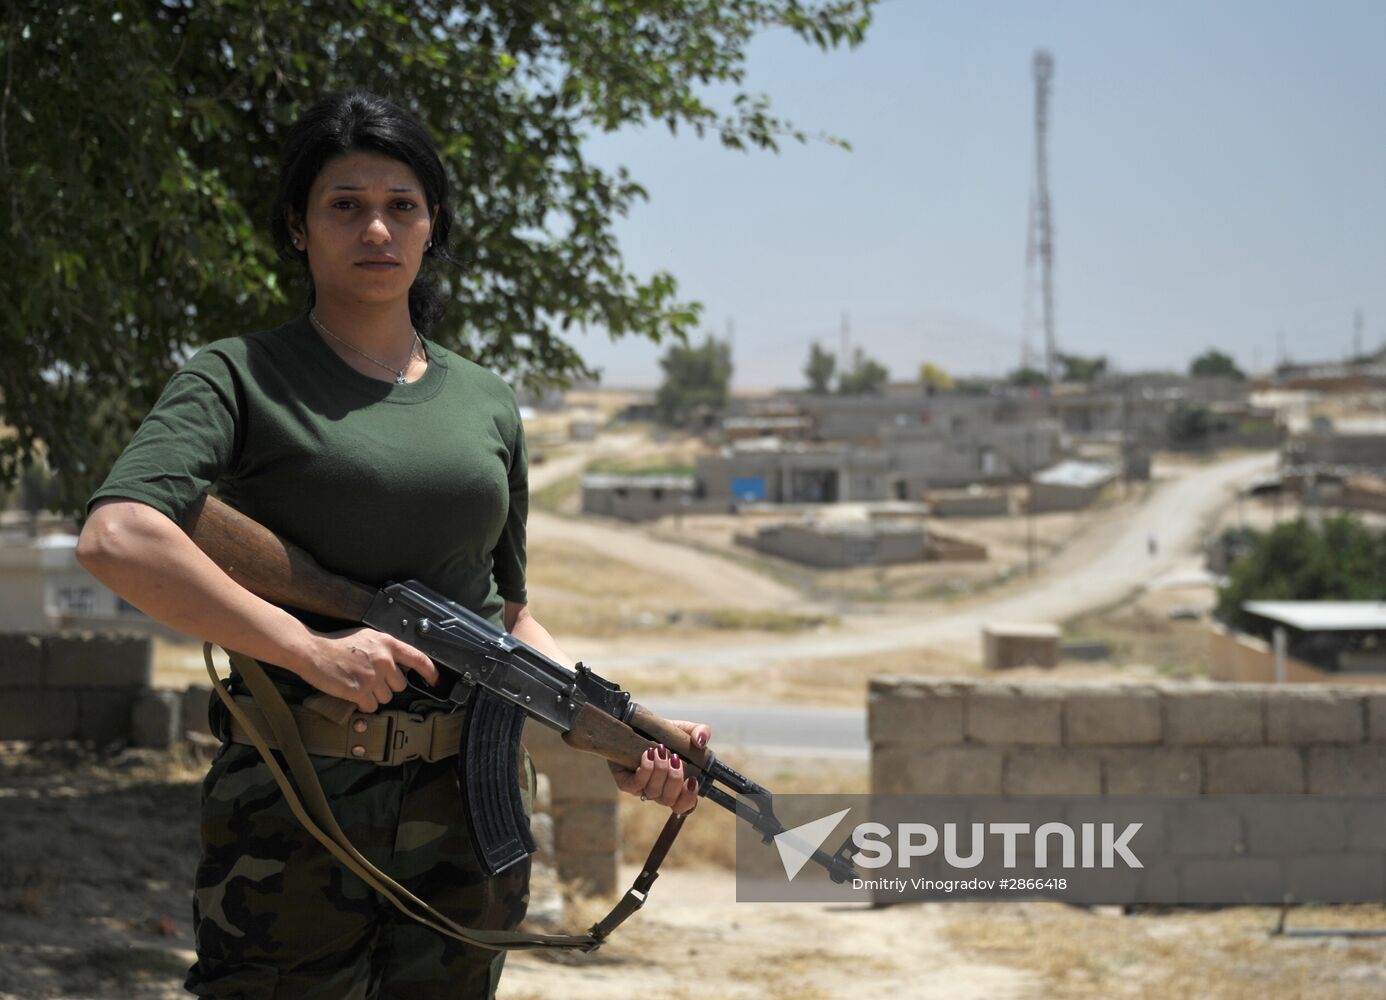 Kurdish fighters against ISIS